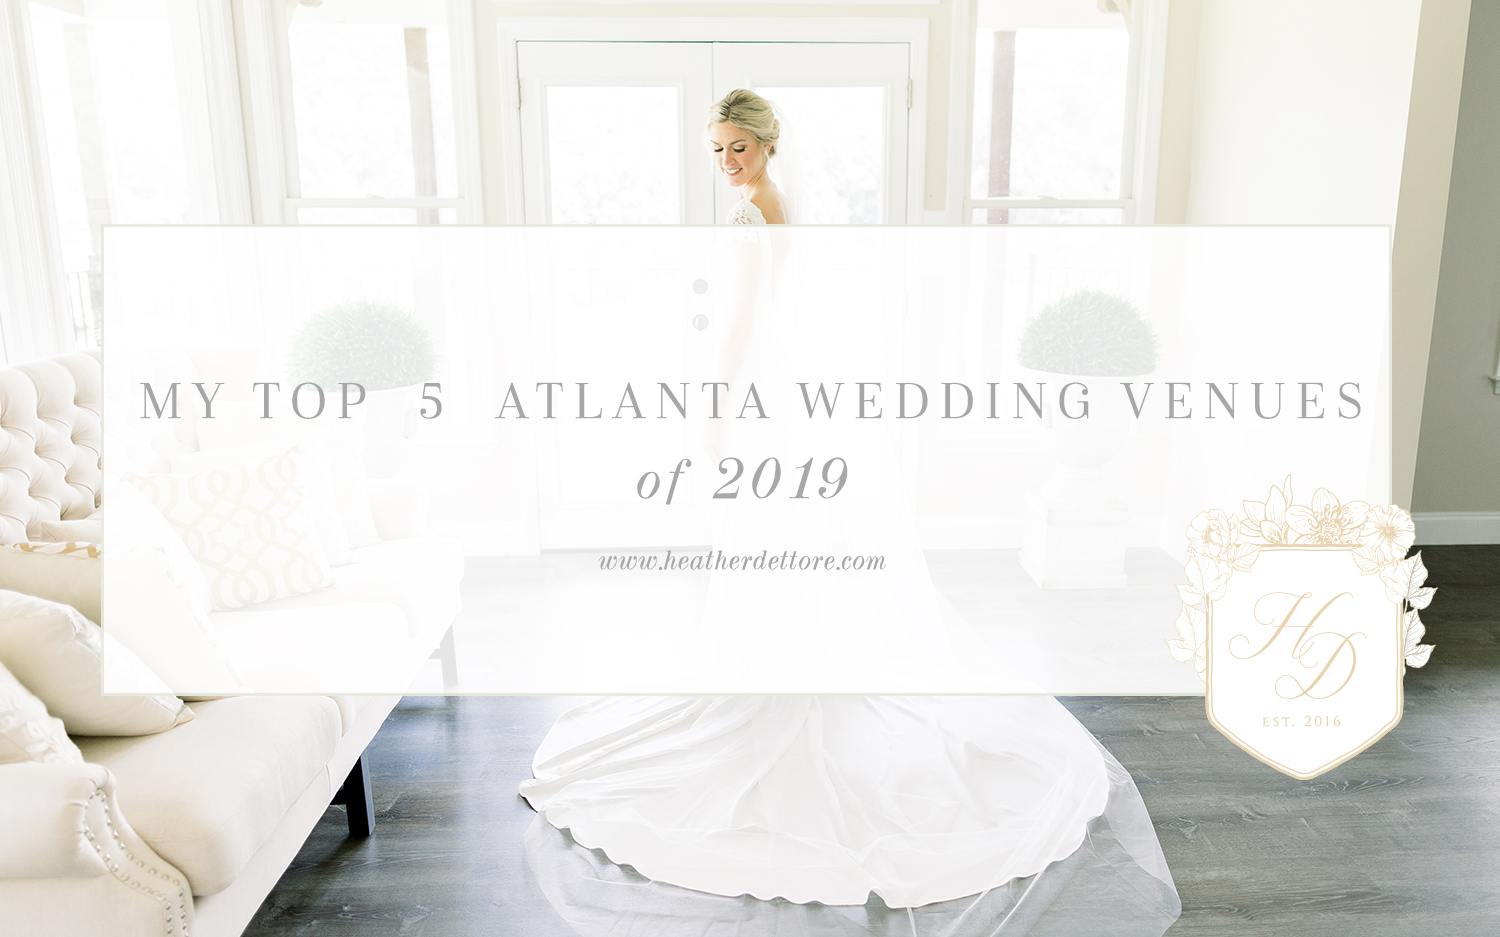 Atlanta_Georgia_Wedding_Photographer_Engagement_Portraits_Light and Airy_ Atlanta Rooftop